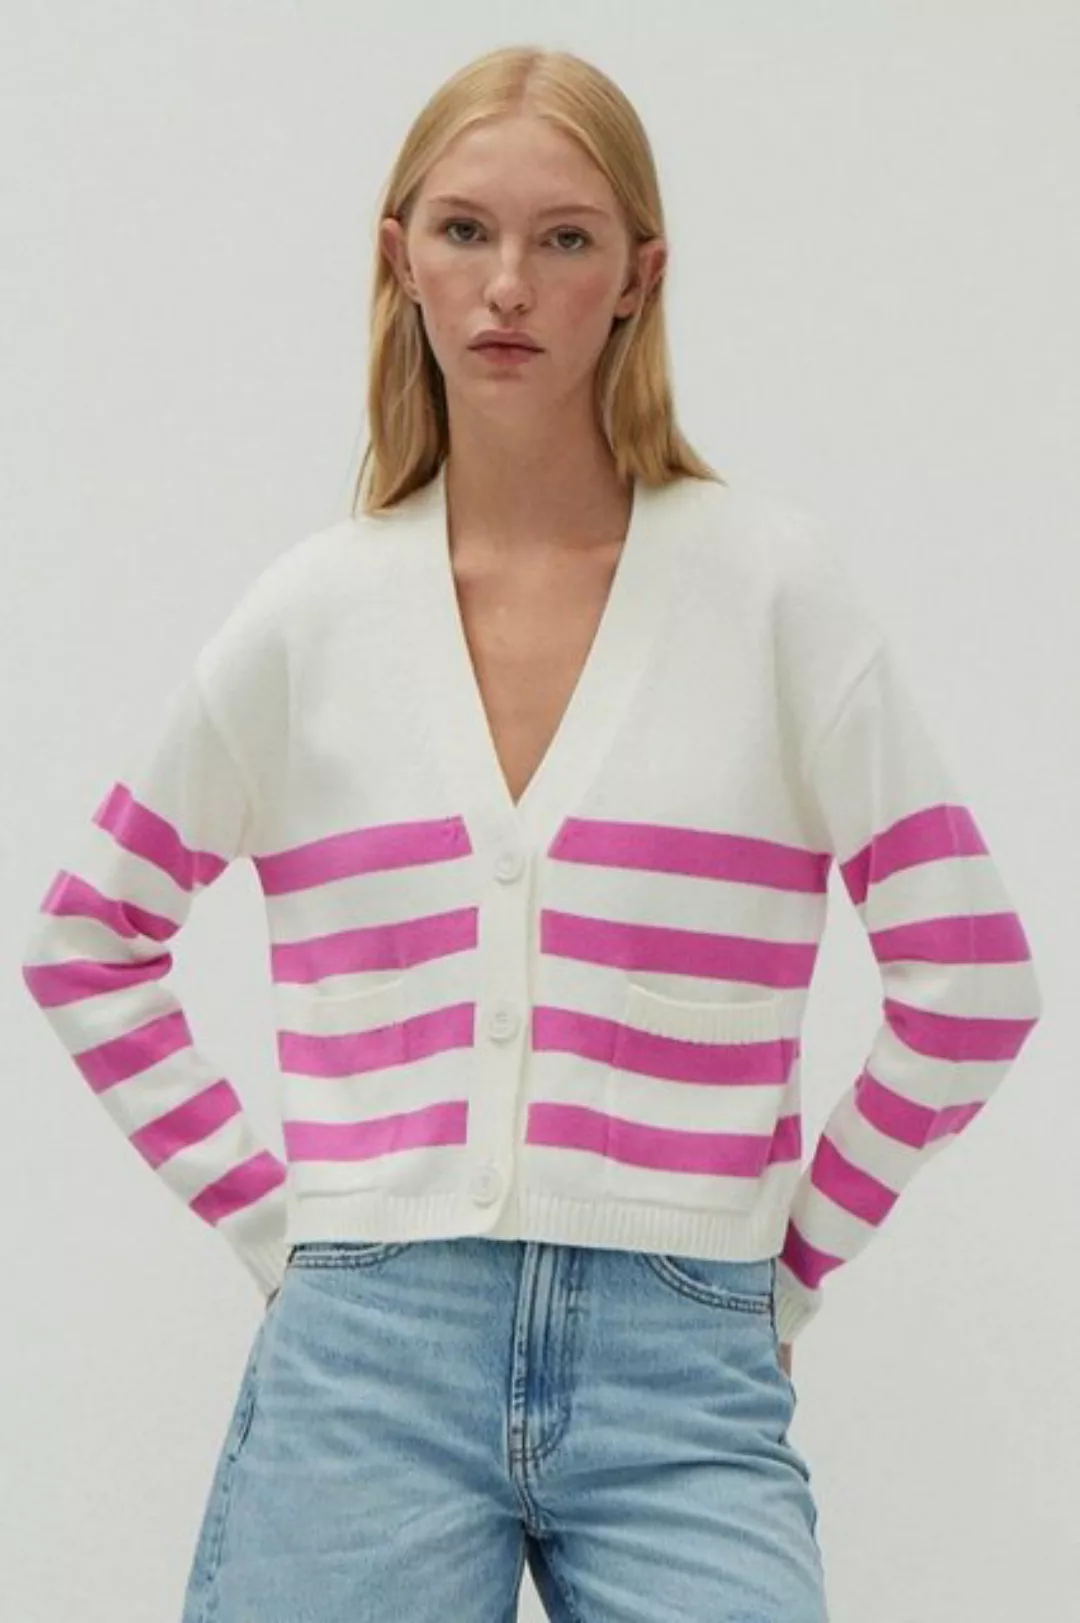 THE FASHION PEOPLE Strickjacke striped cardigan knitted günstig online kaufen